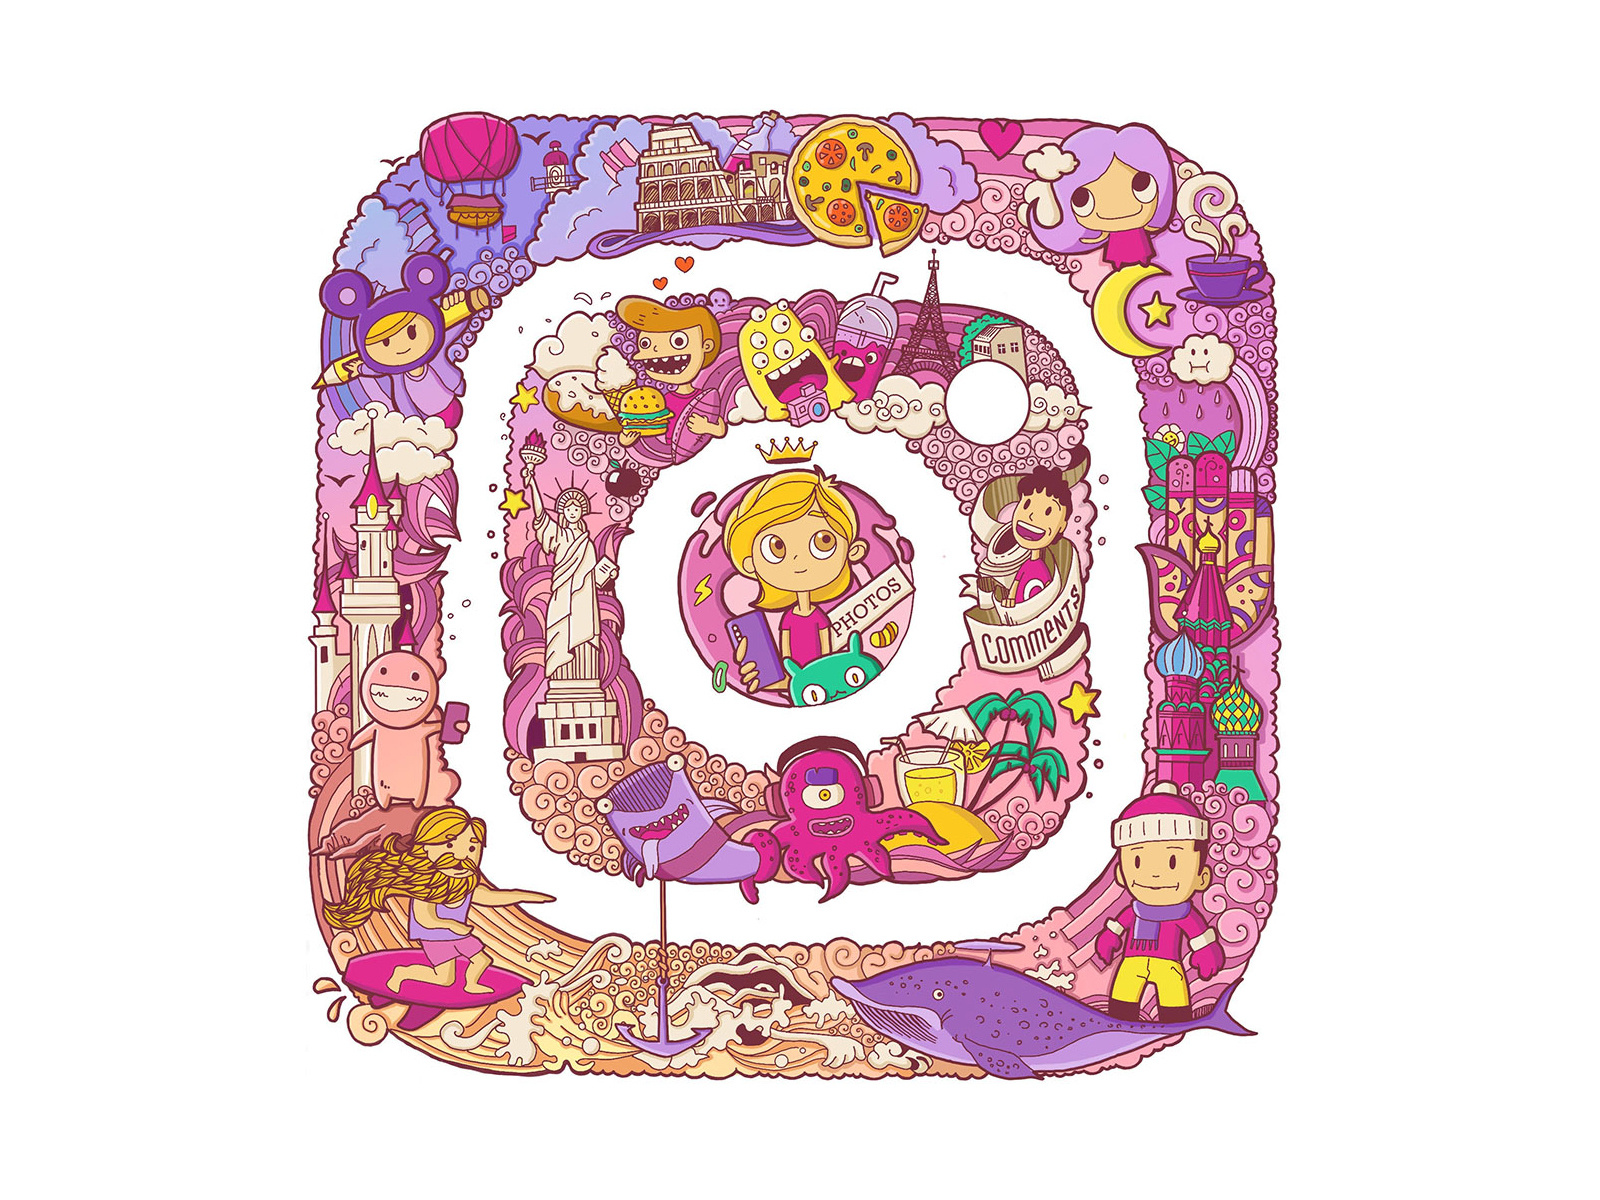 Instagram logo illustration